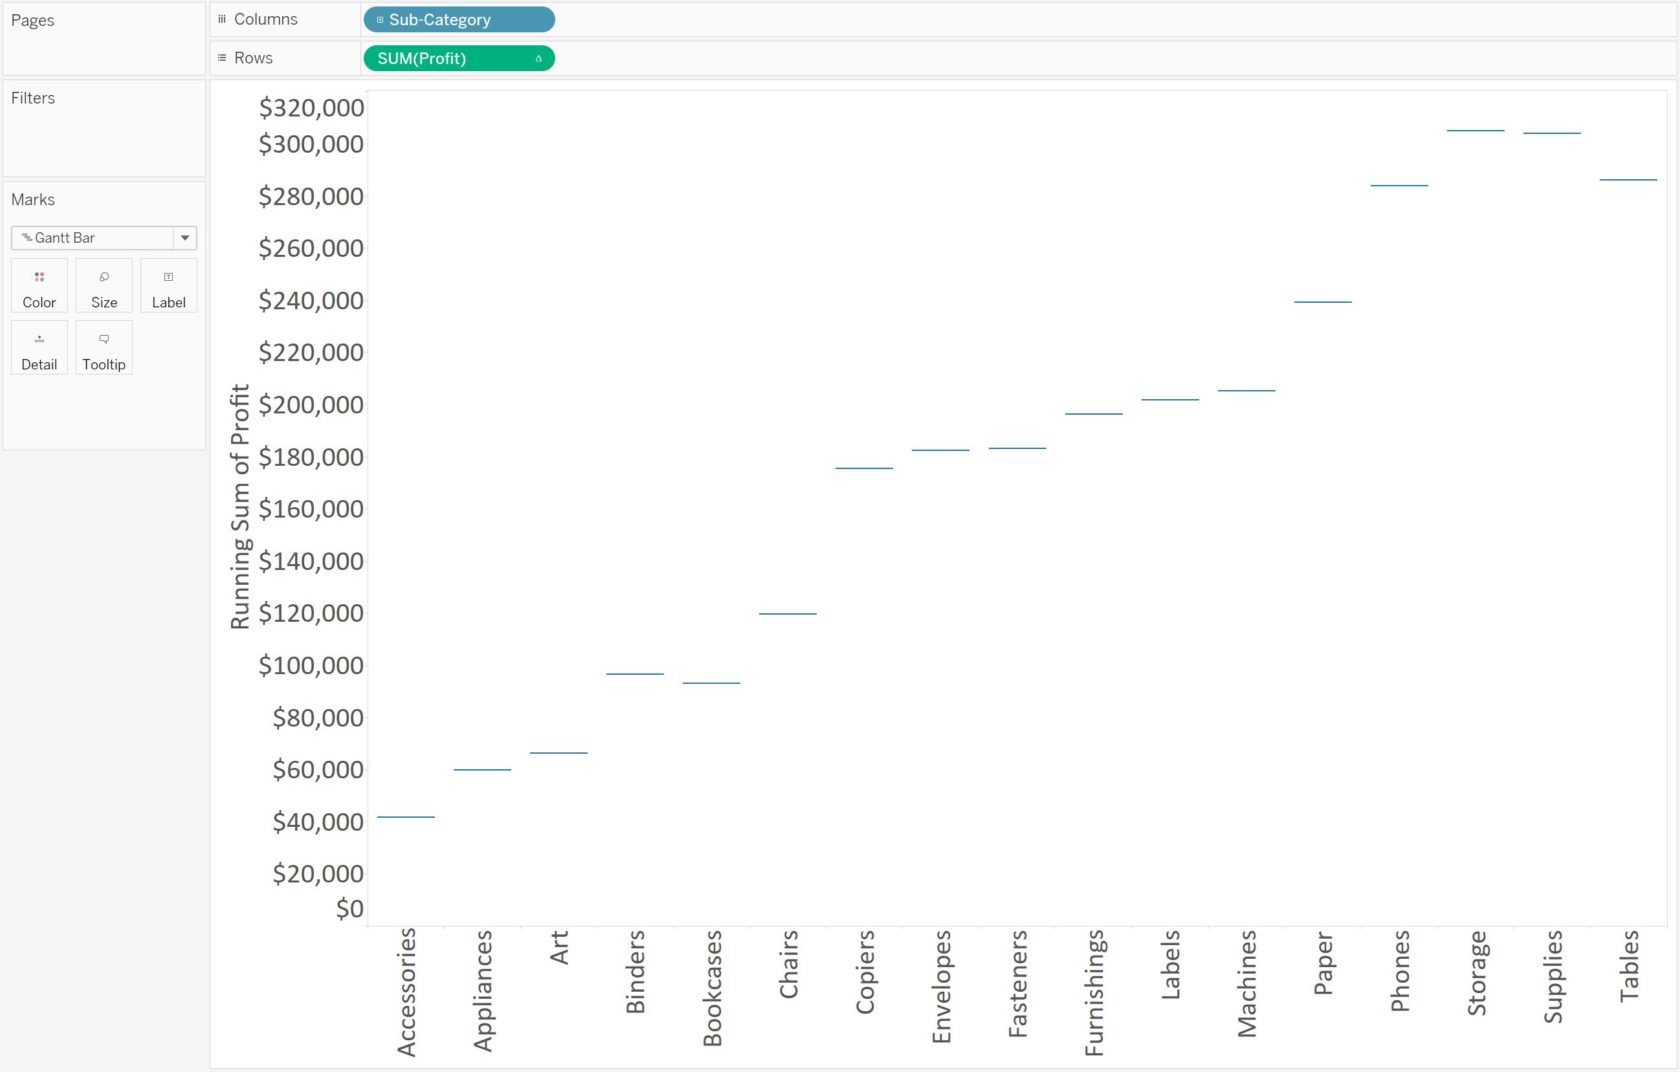 Tableau Gantt Bar Chart Profit by Sub-Category